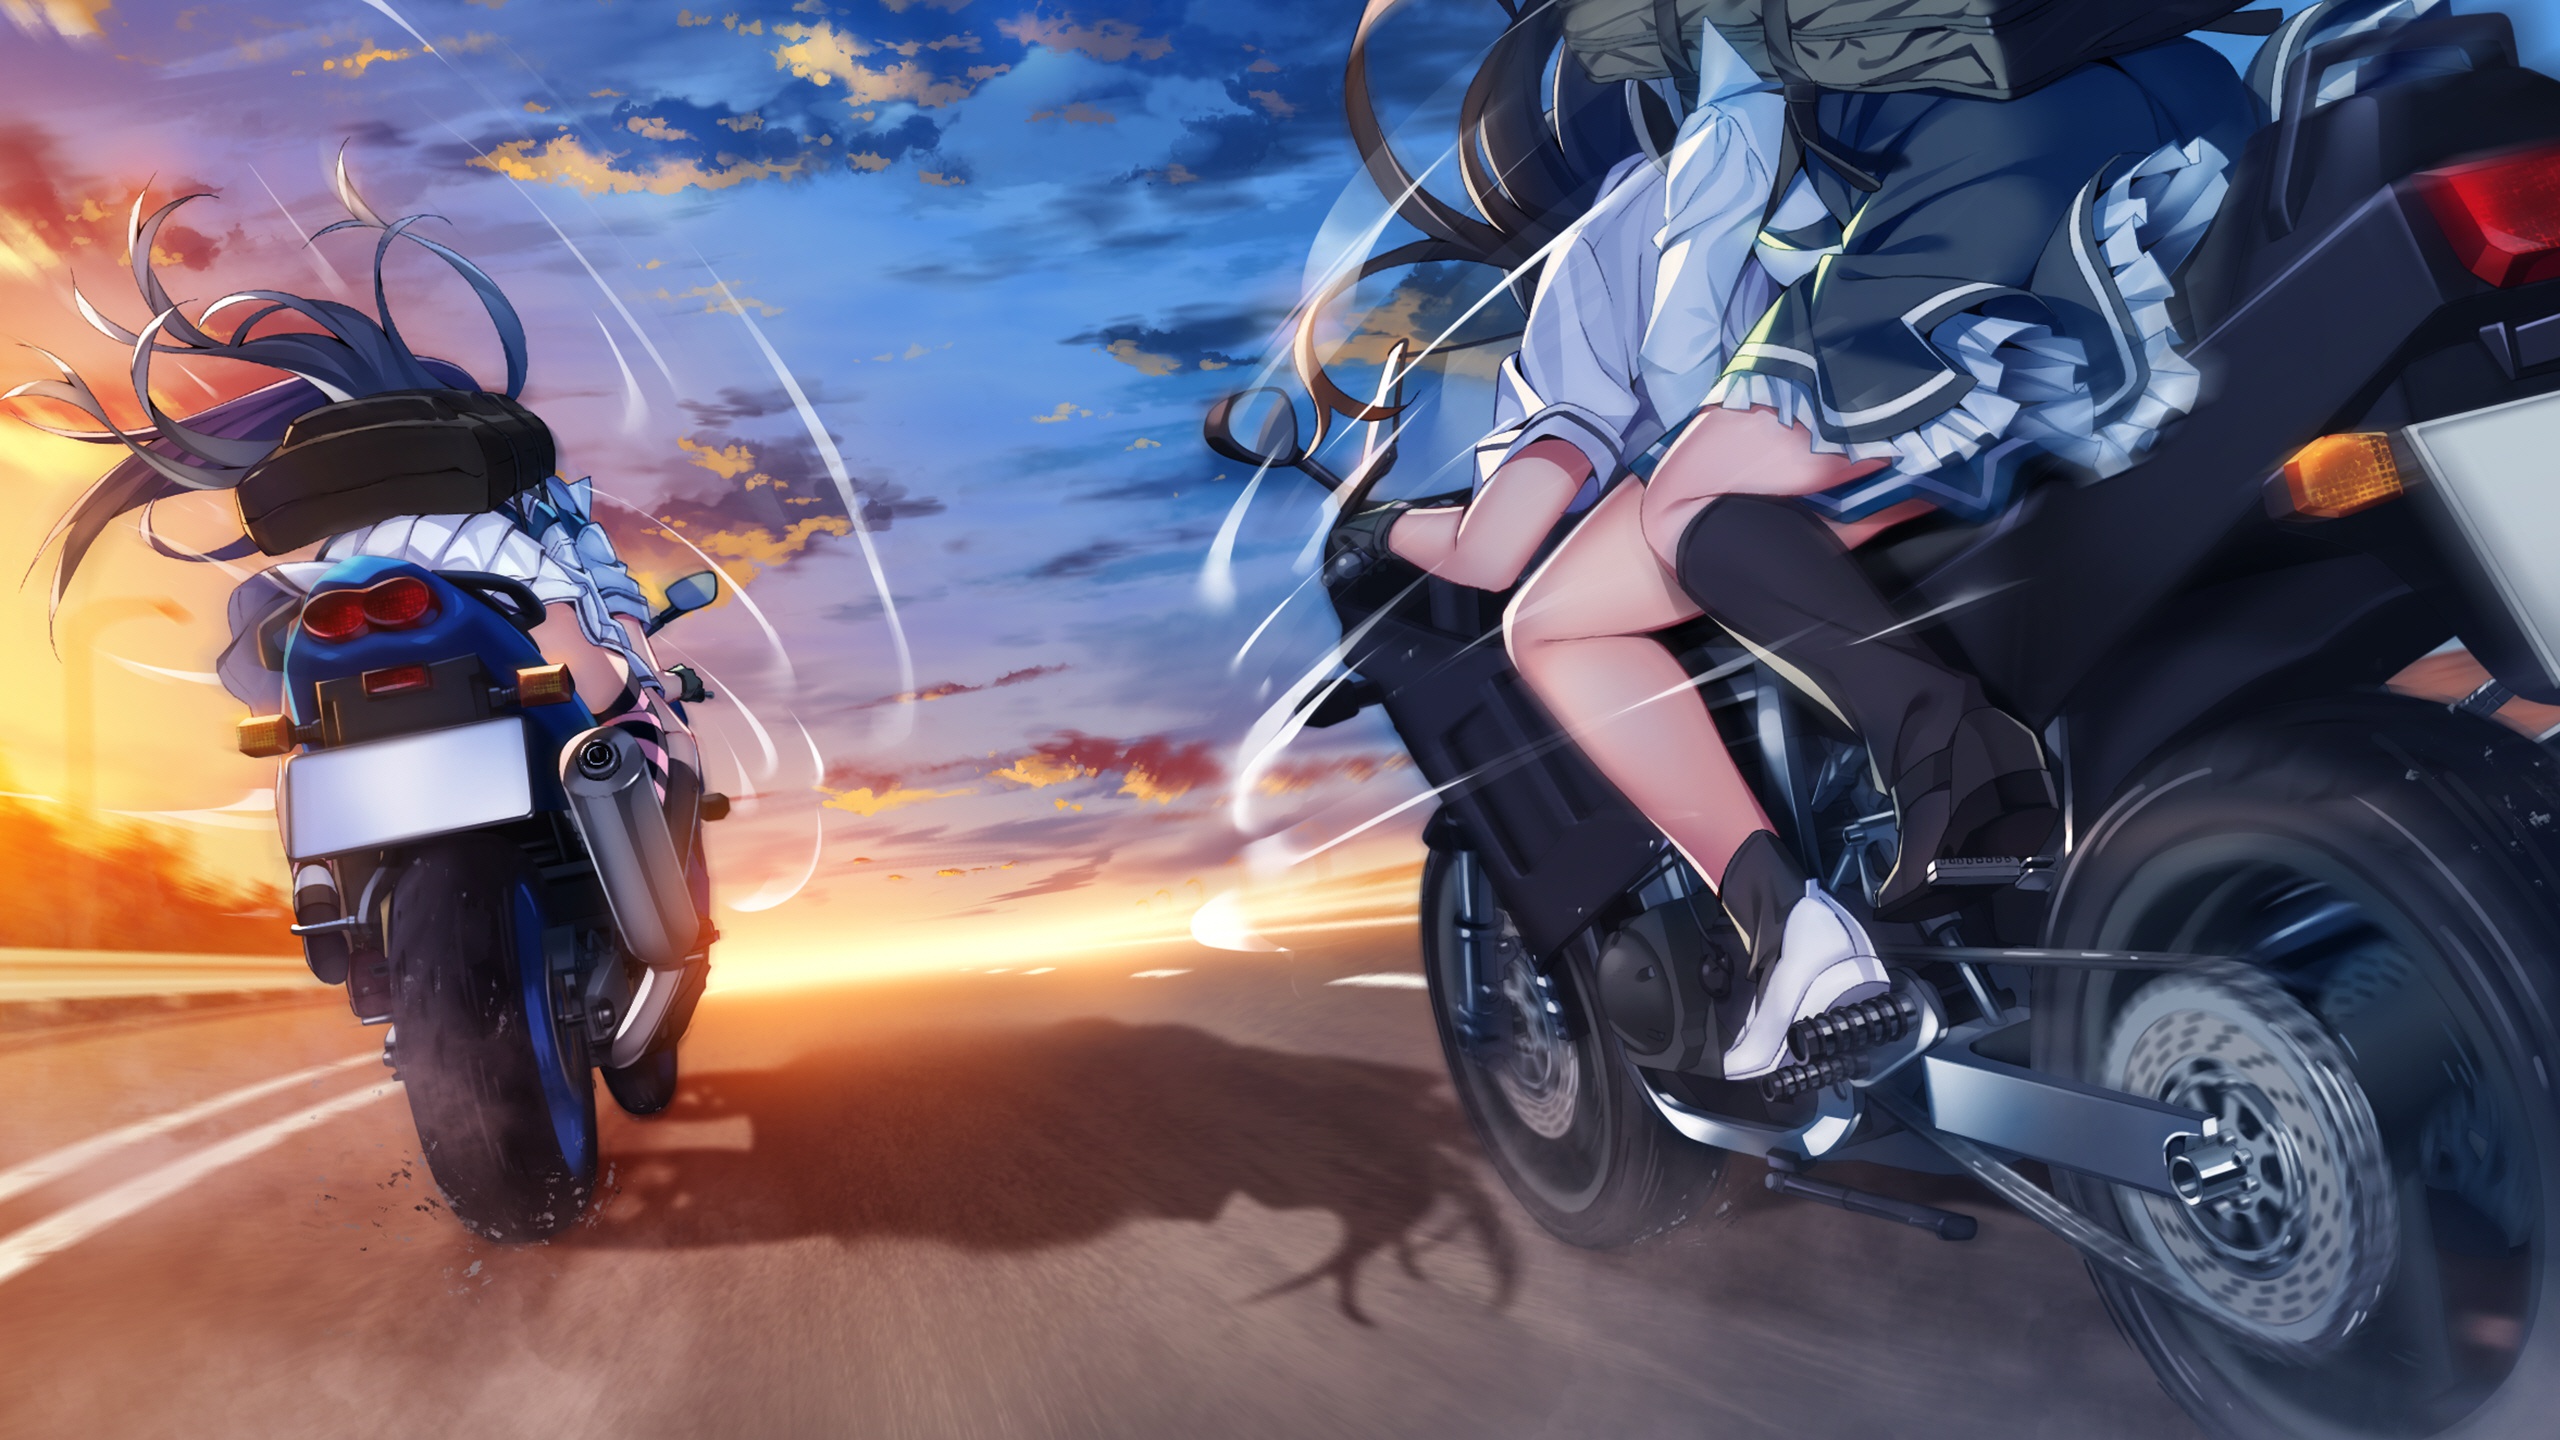 Fondos de Pantalla 2560x1440 Grisaia: Phantom Trigger Movimiento Anime  Chicas Motocicleta descargar imagenes